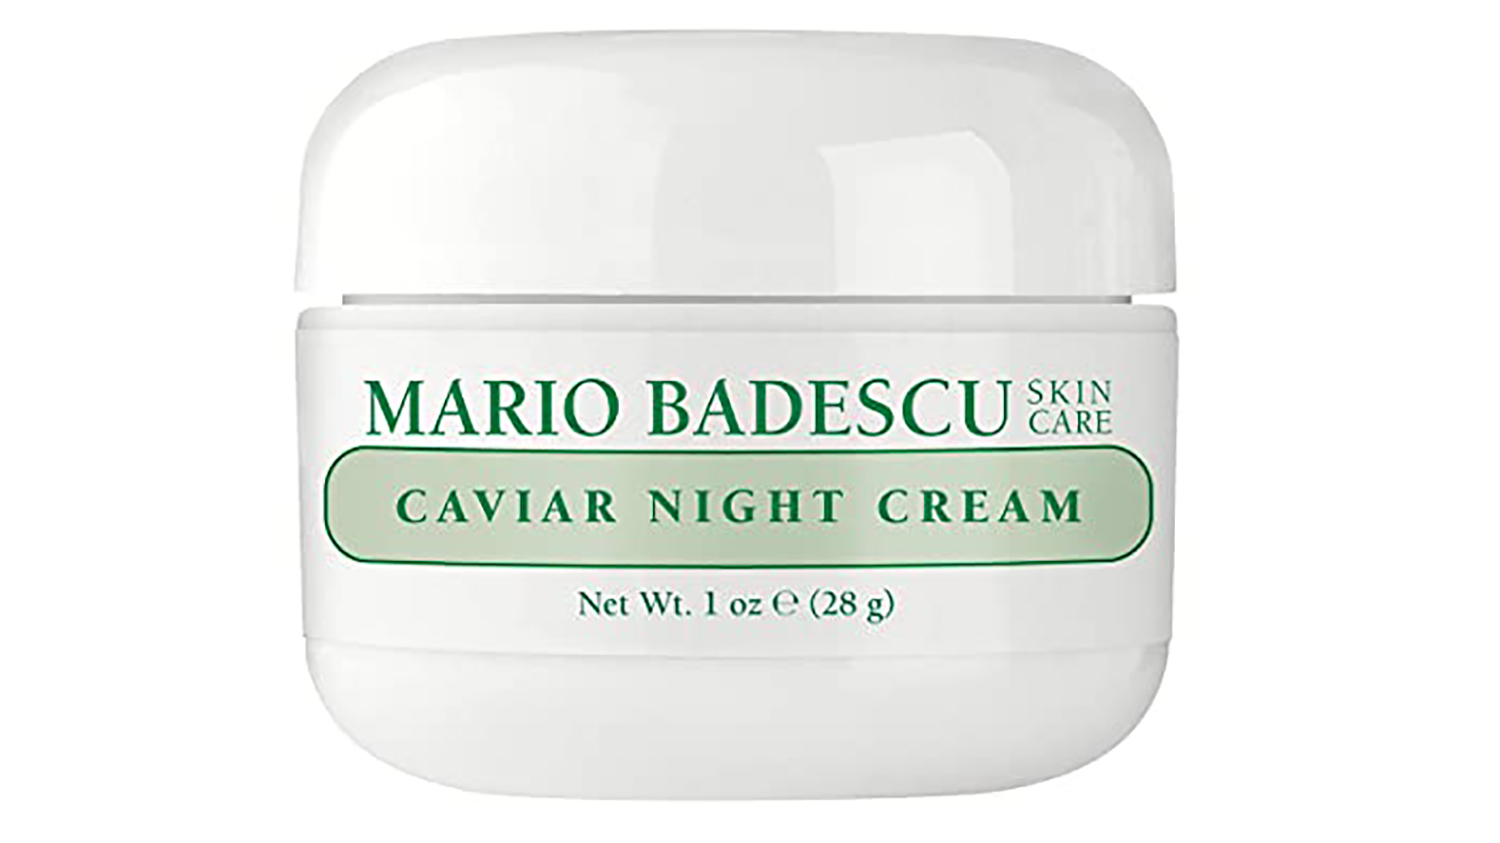 mario badescu caviar night cream